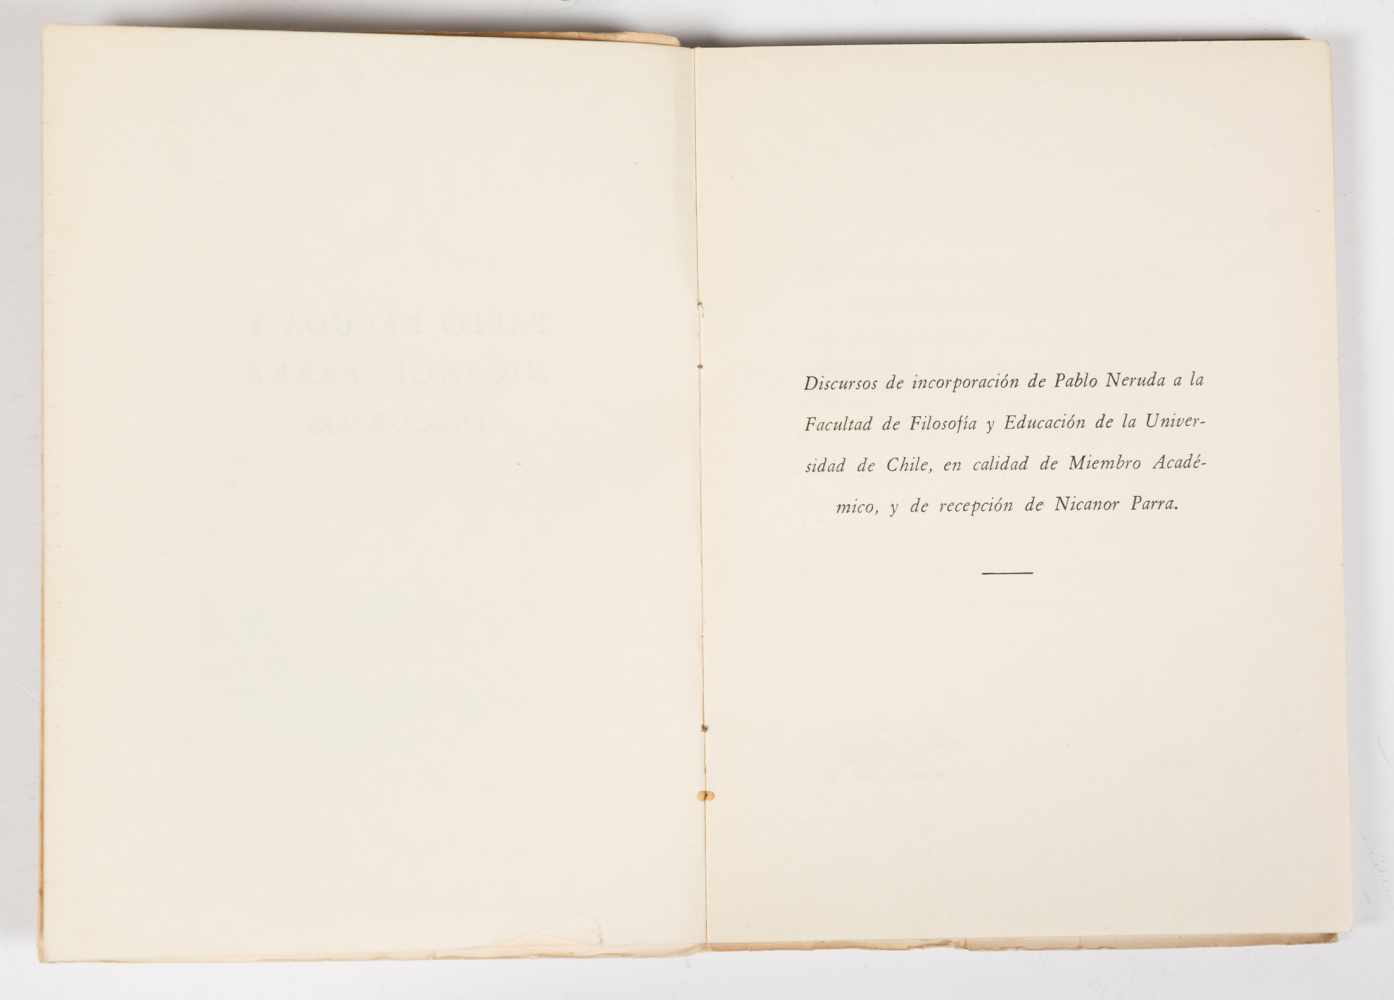 Neruda, Pablo; Parra, Nicanor. "Discursos" (Speeches). 1st edition. Santiago de Chile: Published - Image 3 of 4